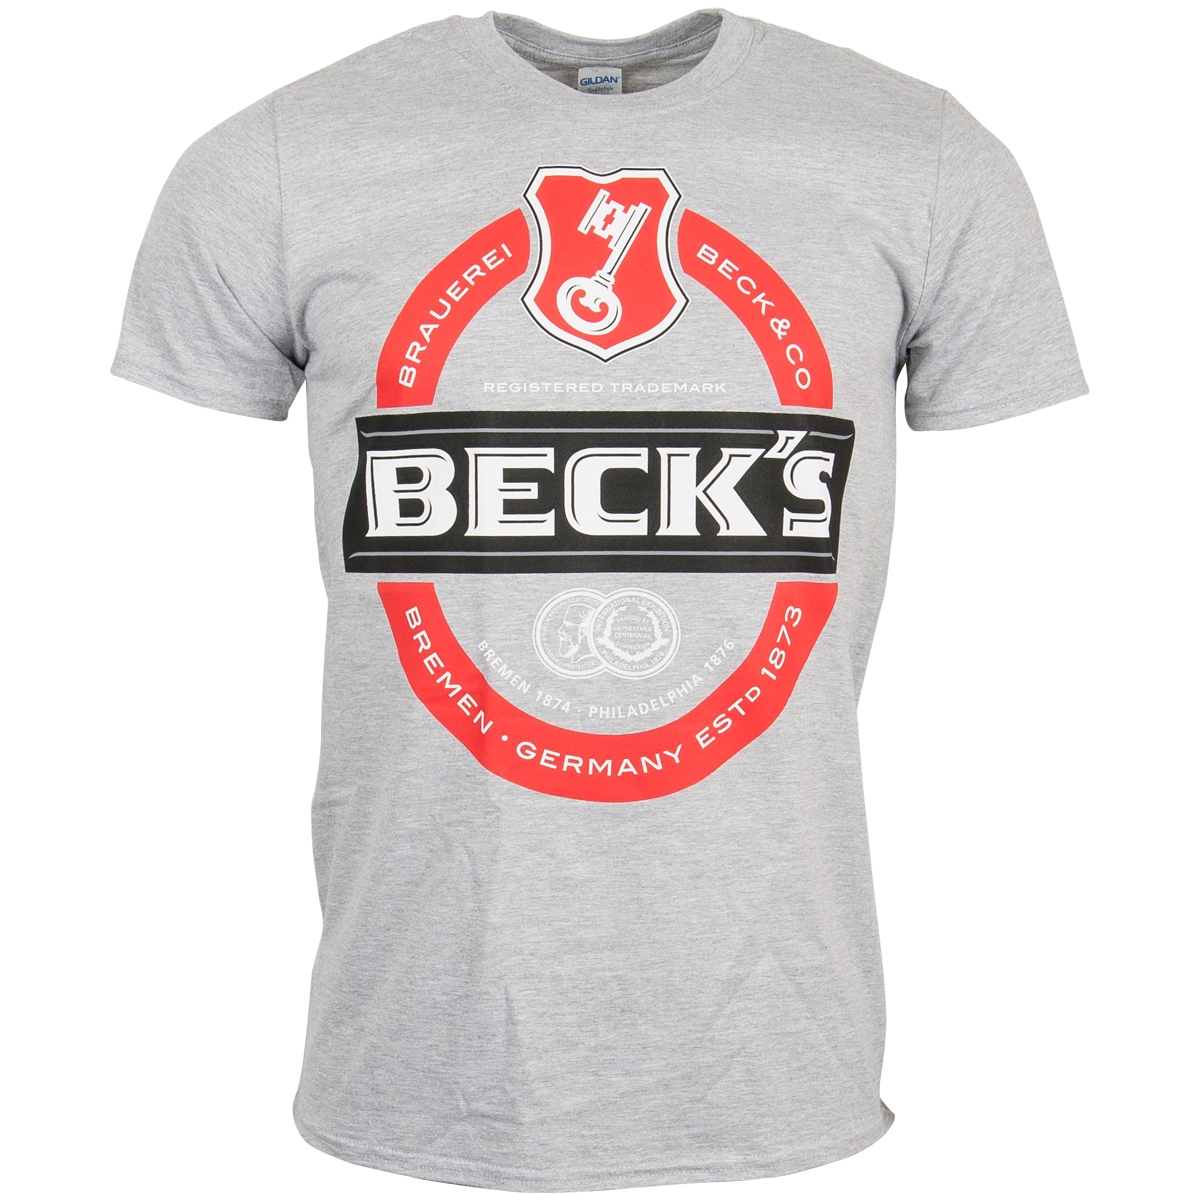 Beck's - Label Logo T-Shirt - grau 